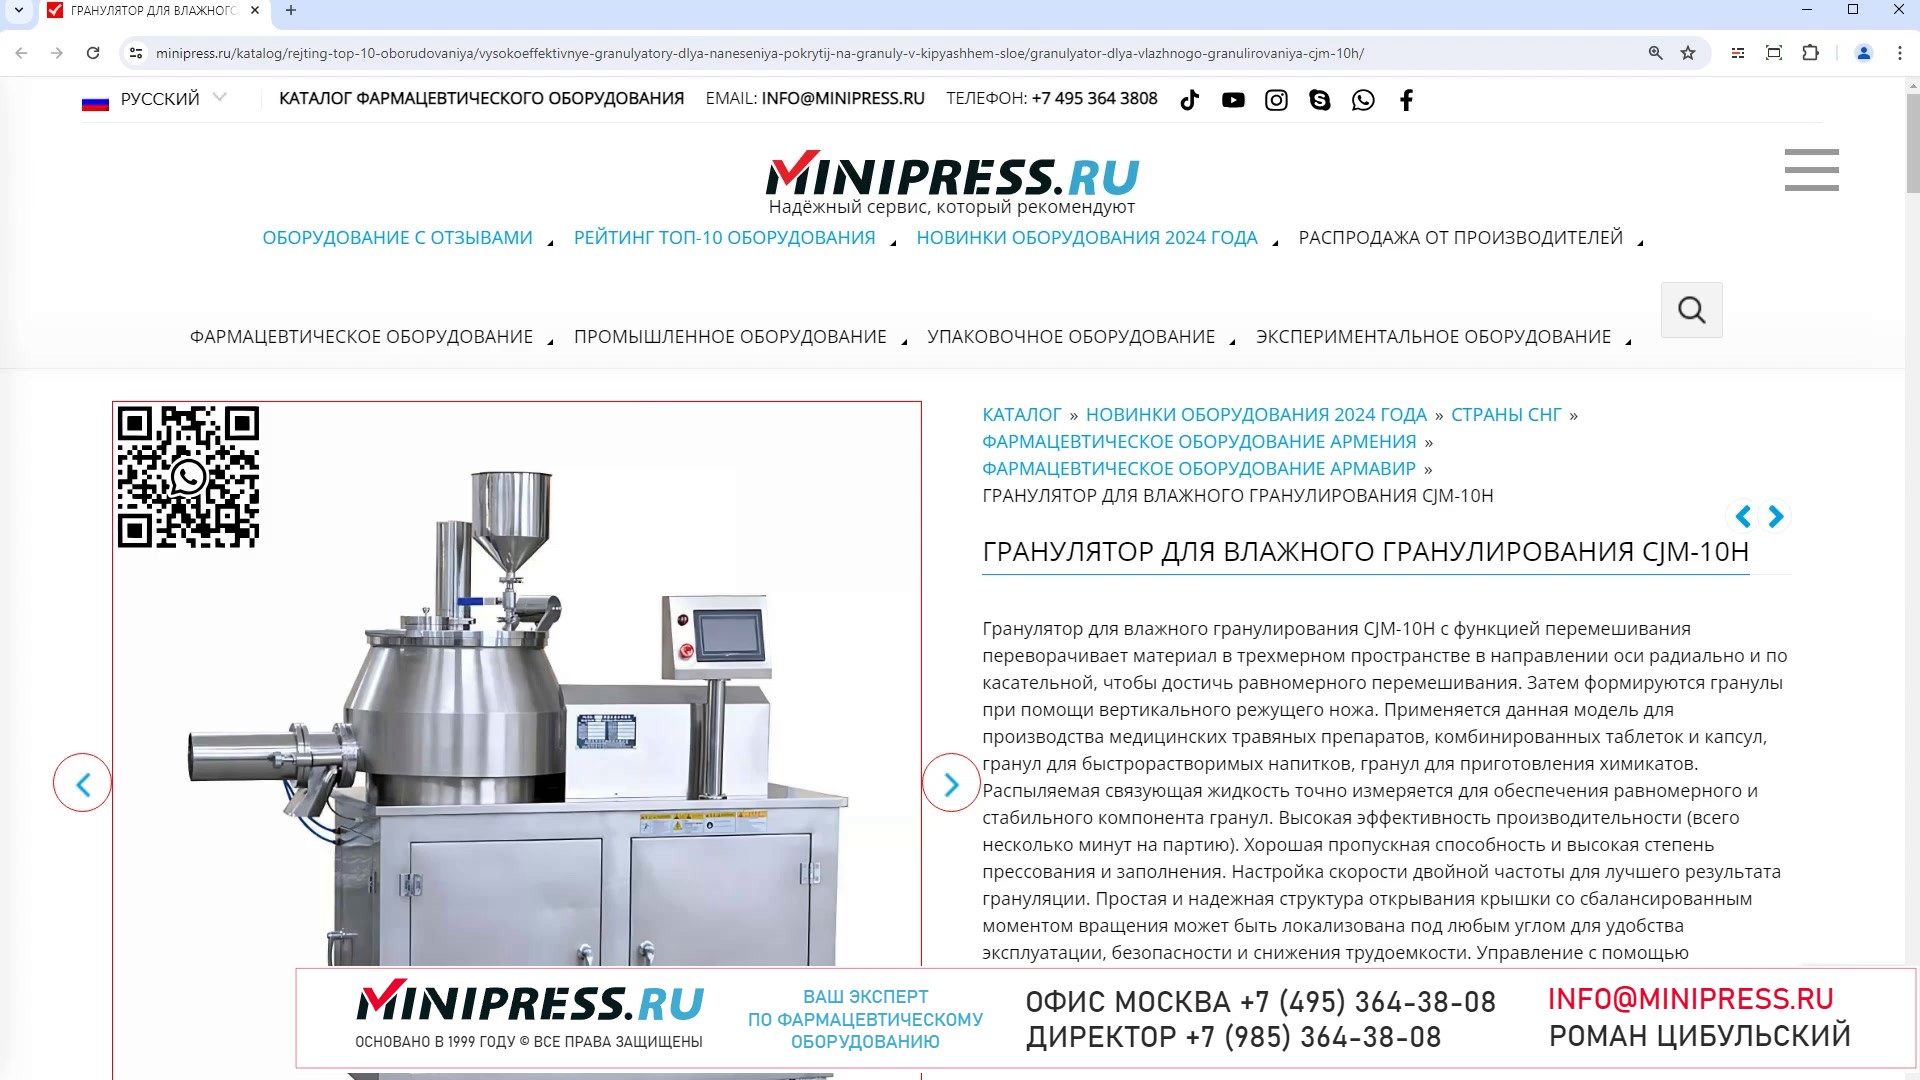 Minipress.ru Гранулятор для влажного гранулирования CJM-10H